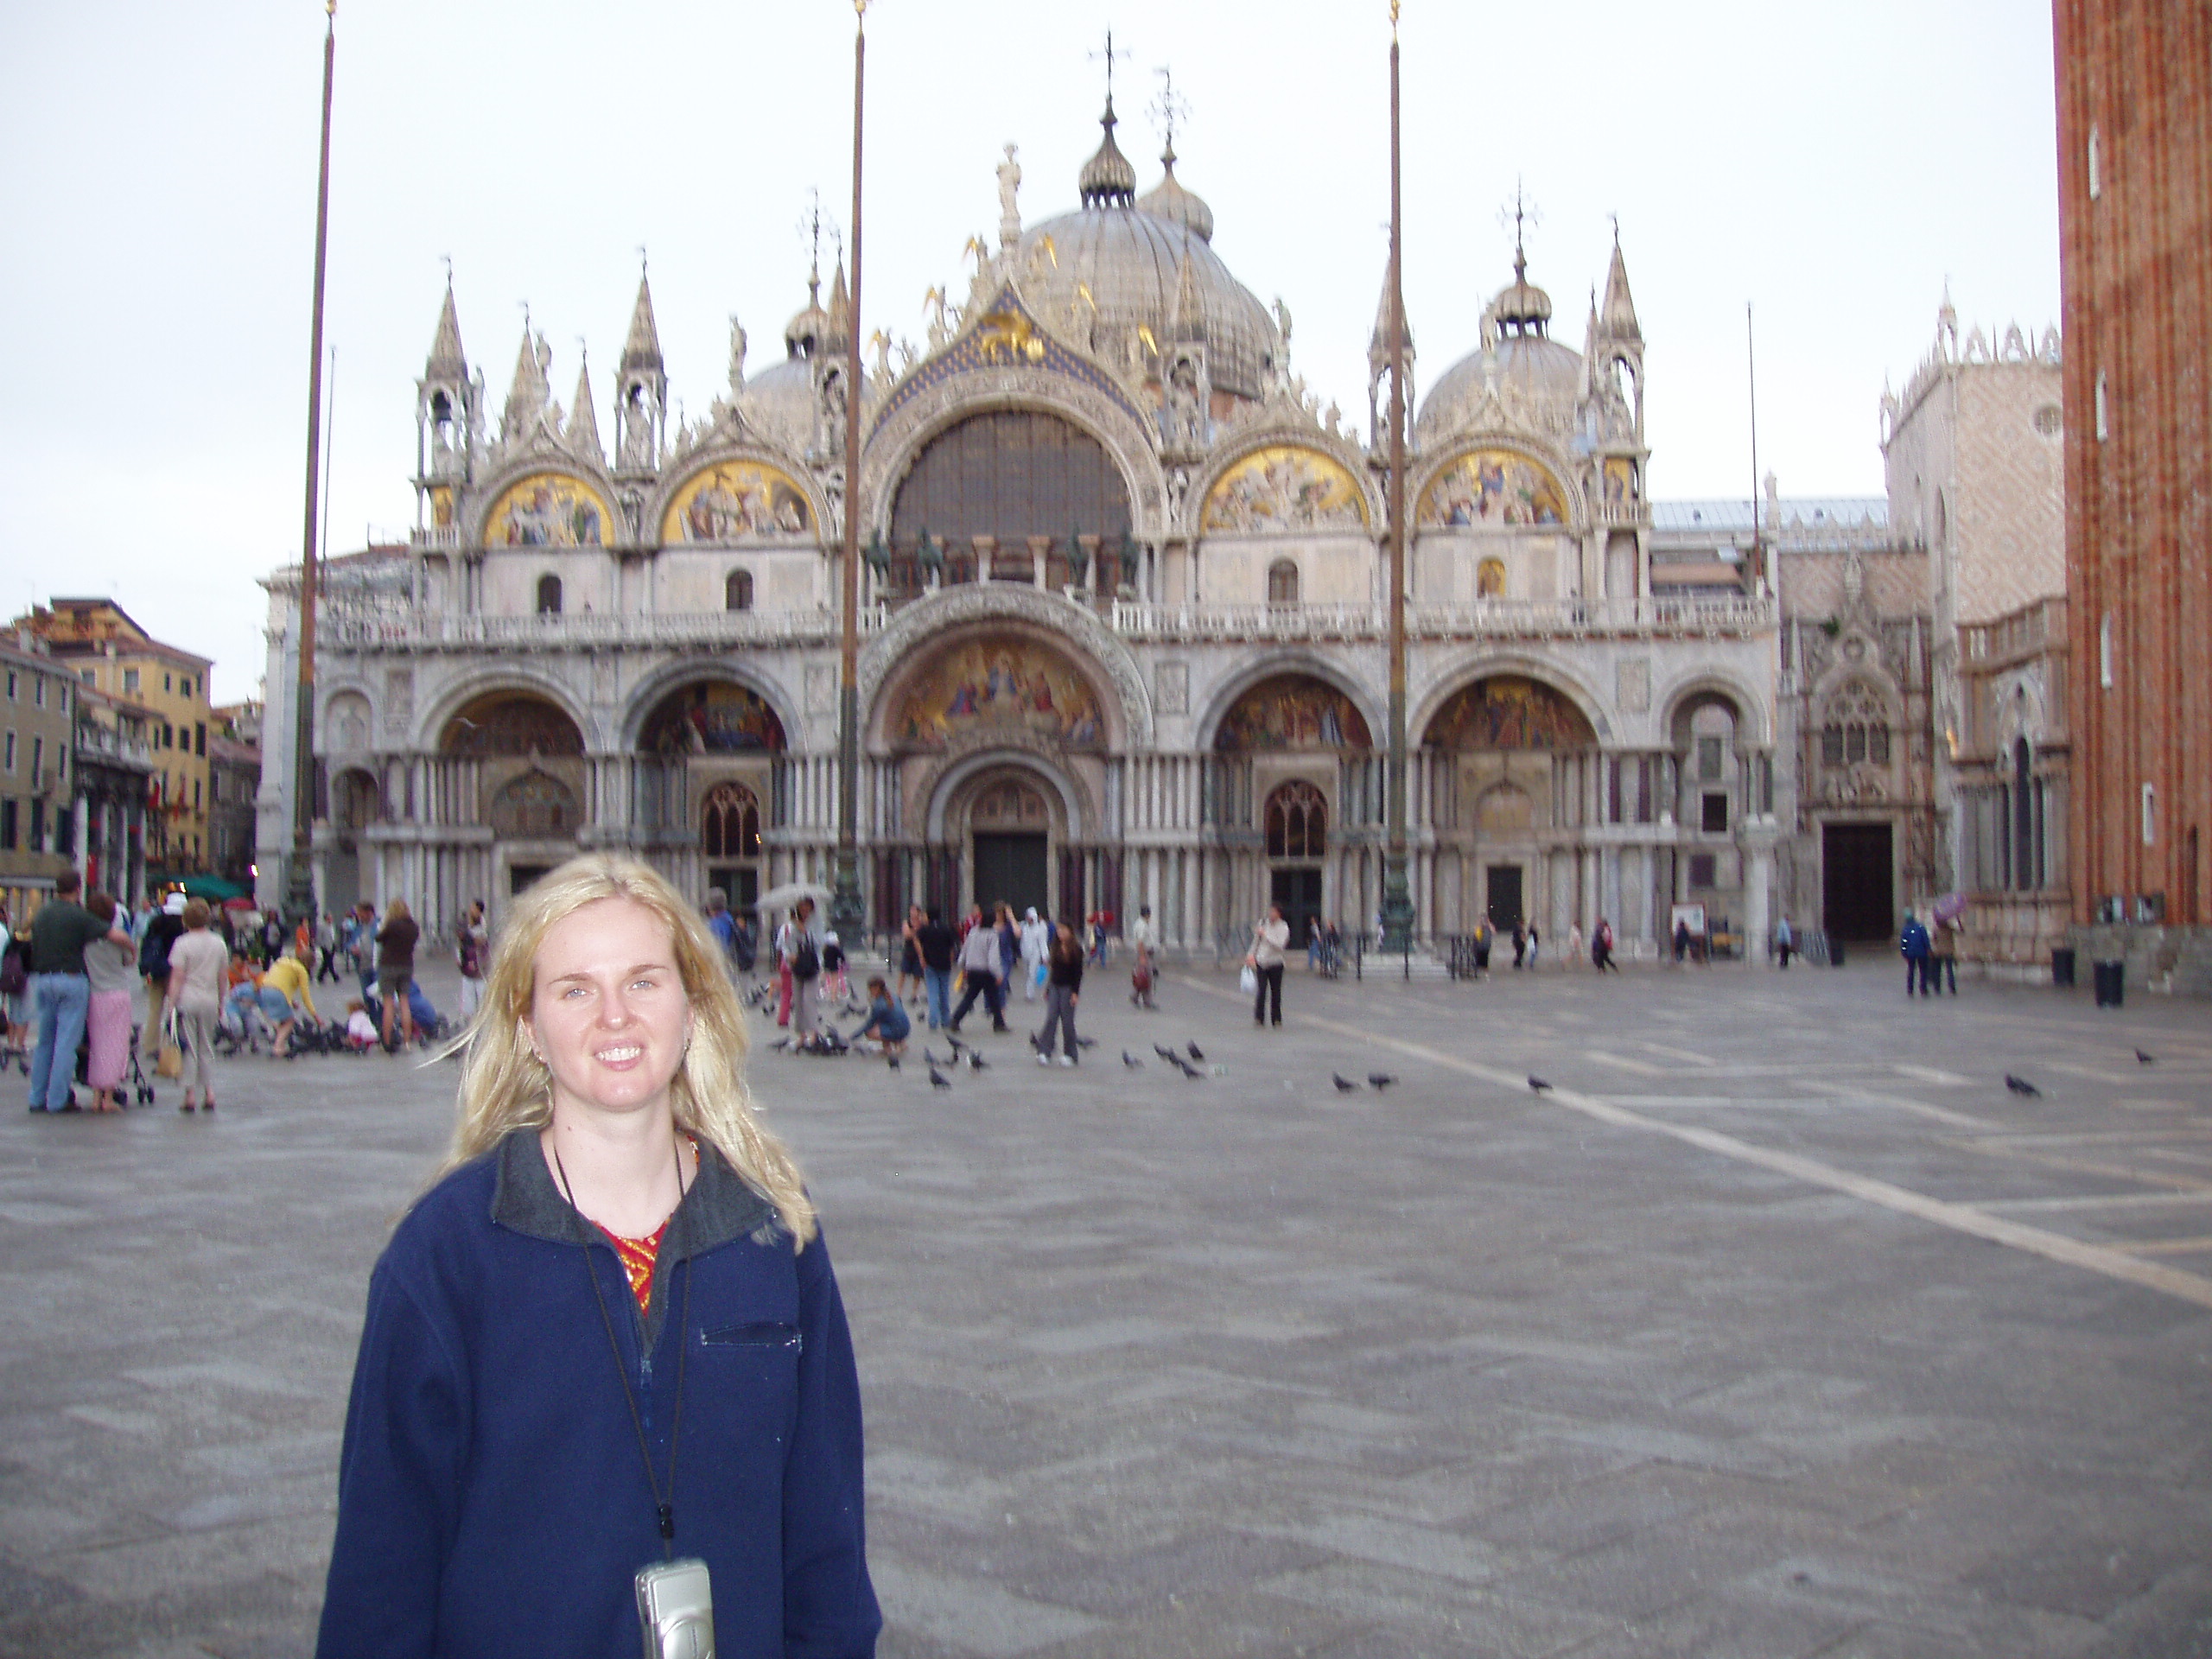 Venice, Piazza San Marco (summer 2002)